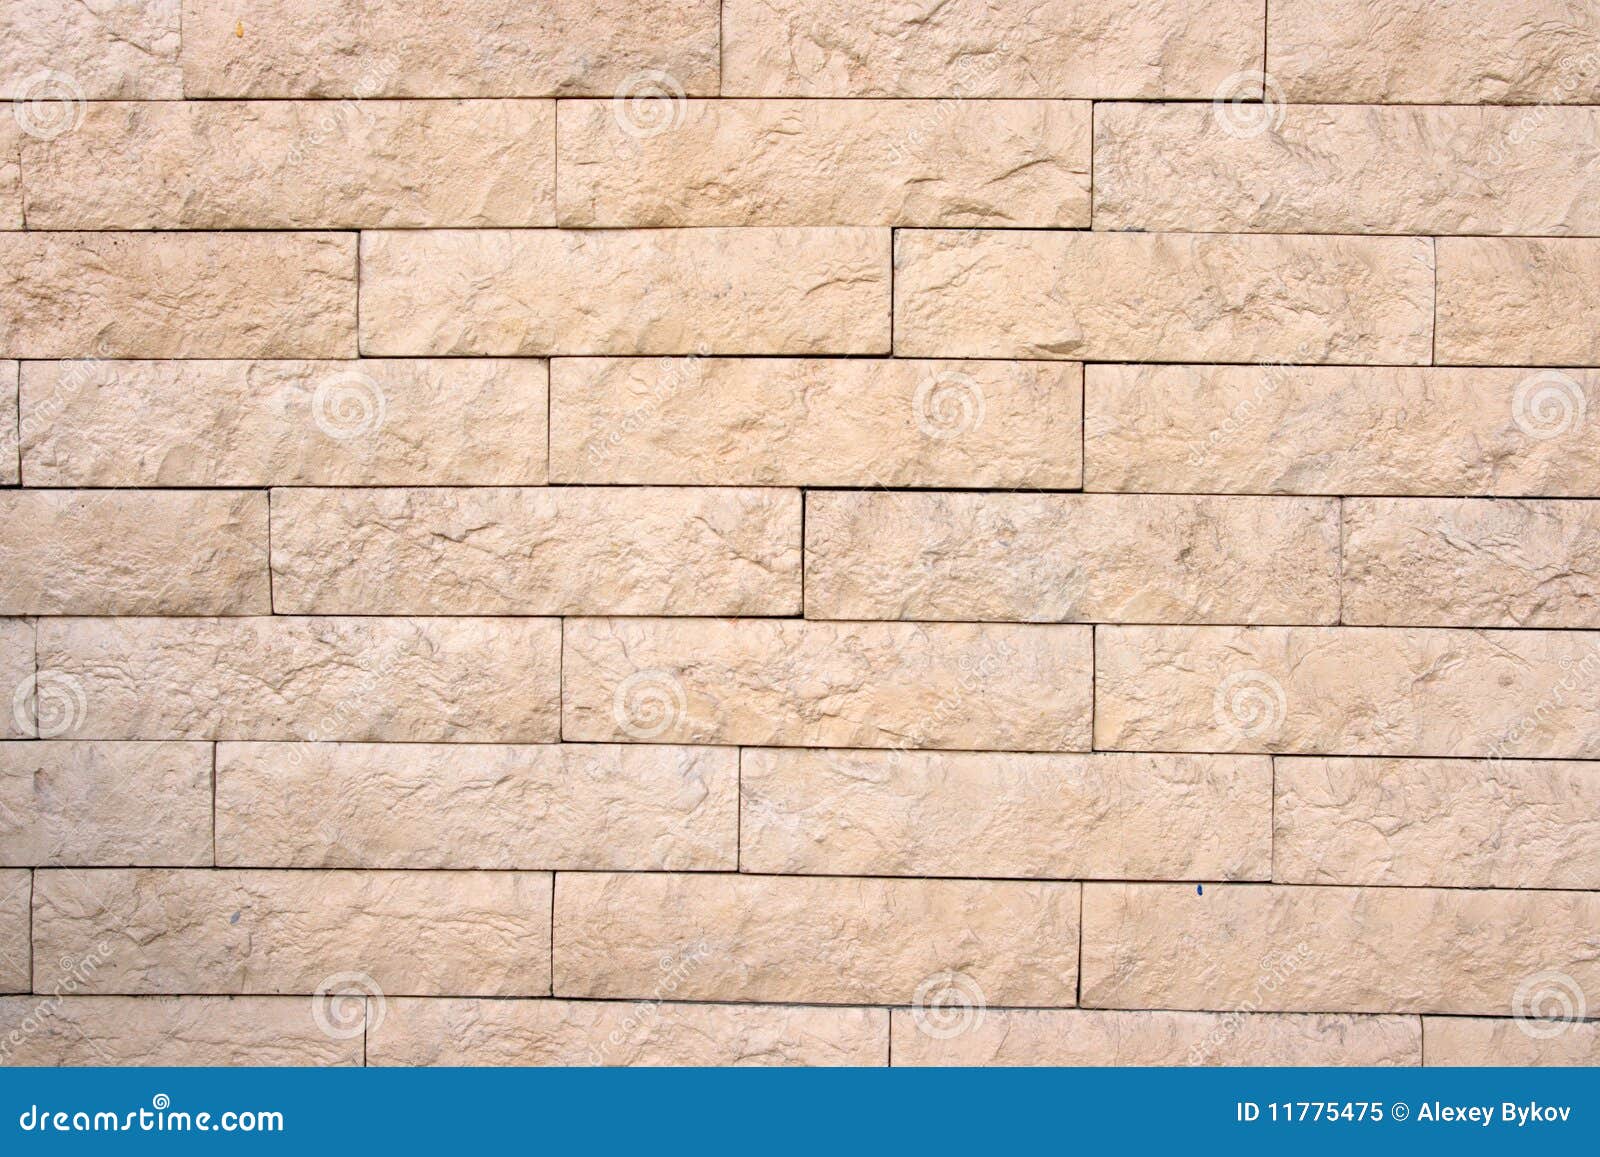 Decorative Brick Wall Royalty Free Stock Photo - Image: 11775475